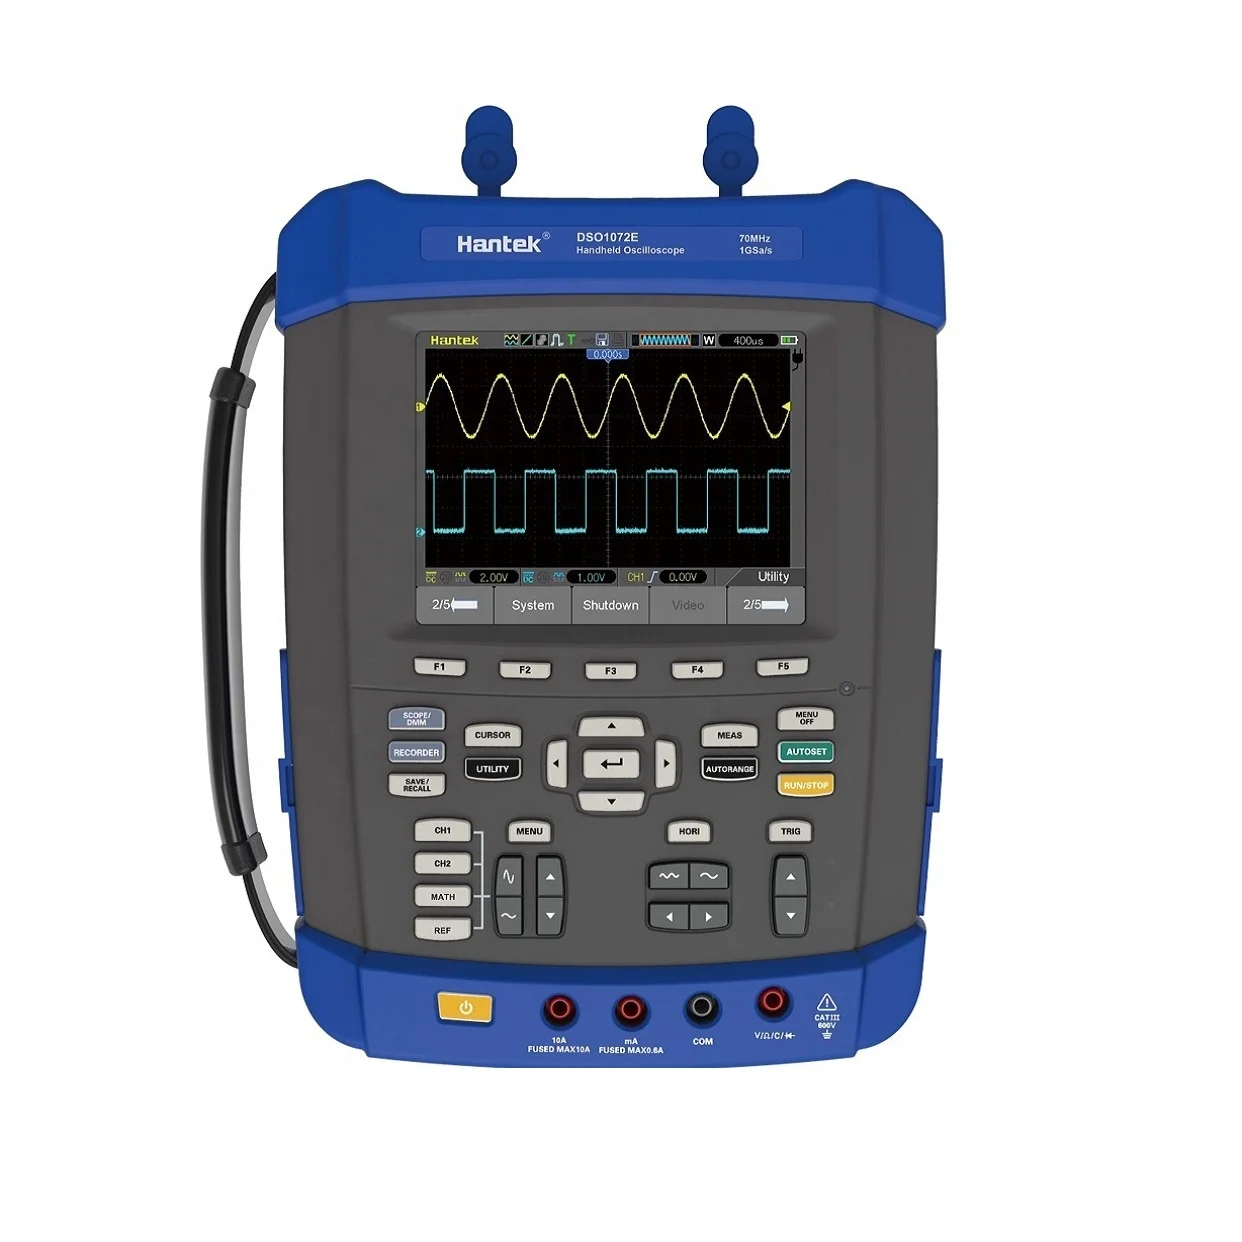 

Hantek DSO1072E 1102E 1152E 1202E Handheld oscilloscope five in one multimeter spectrum analyzer data recorder frequency meter